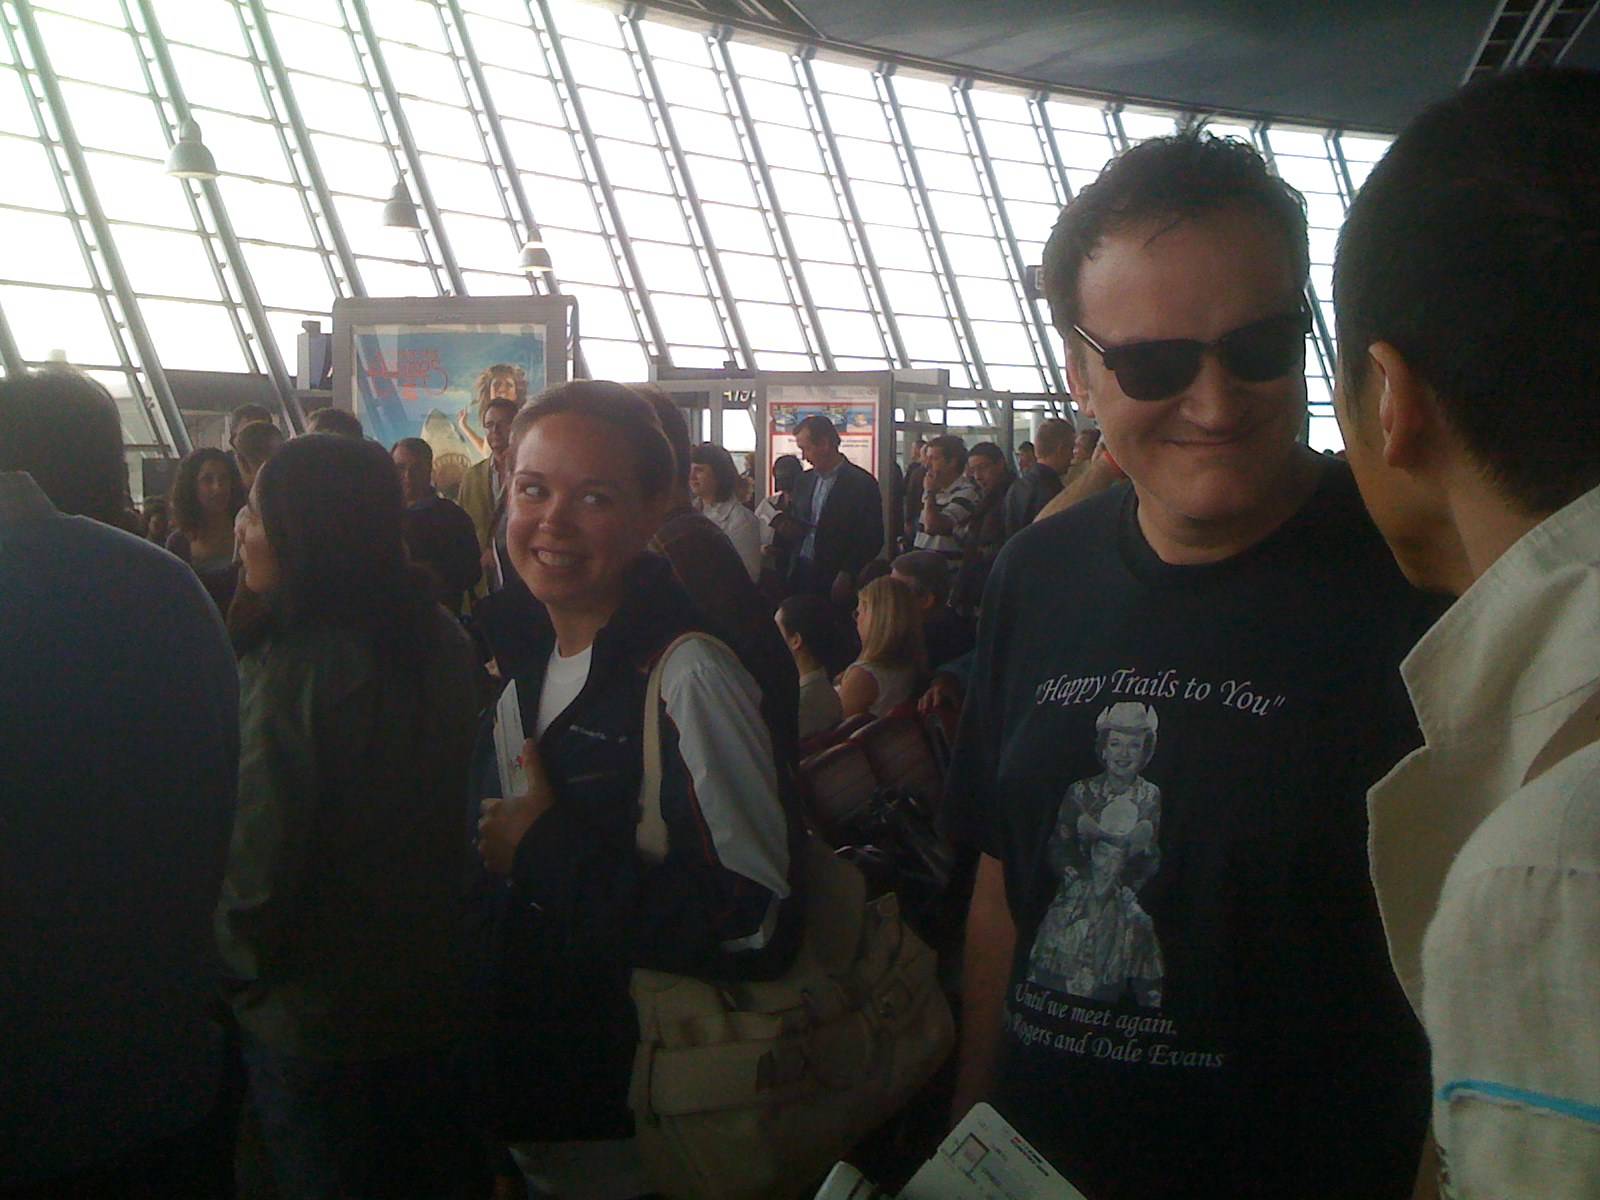 Meeting Quentin Tarantino at the airport